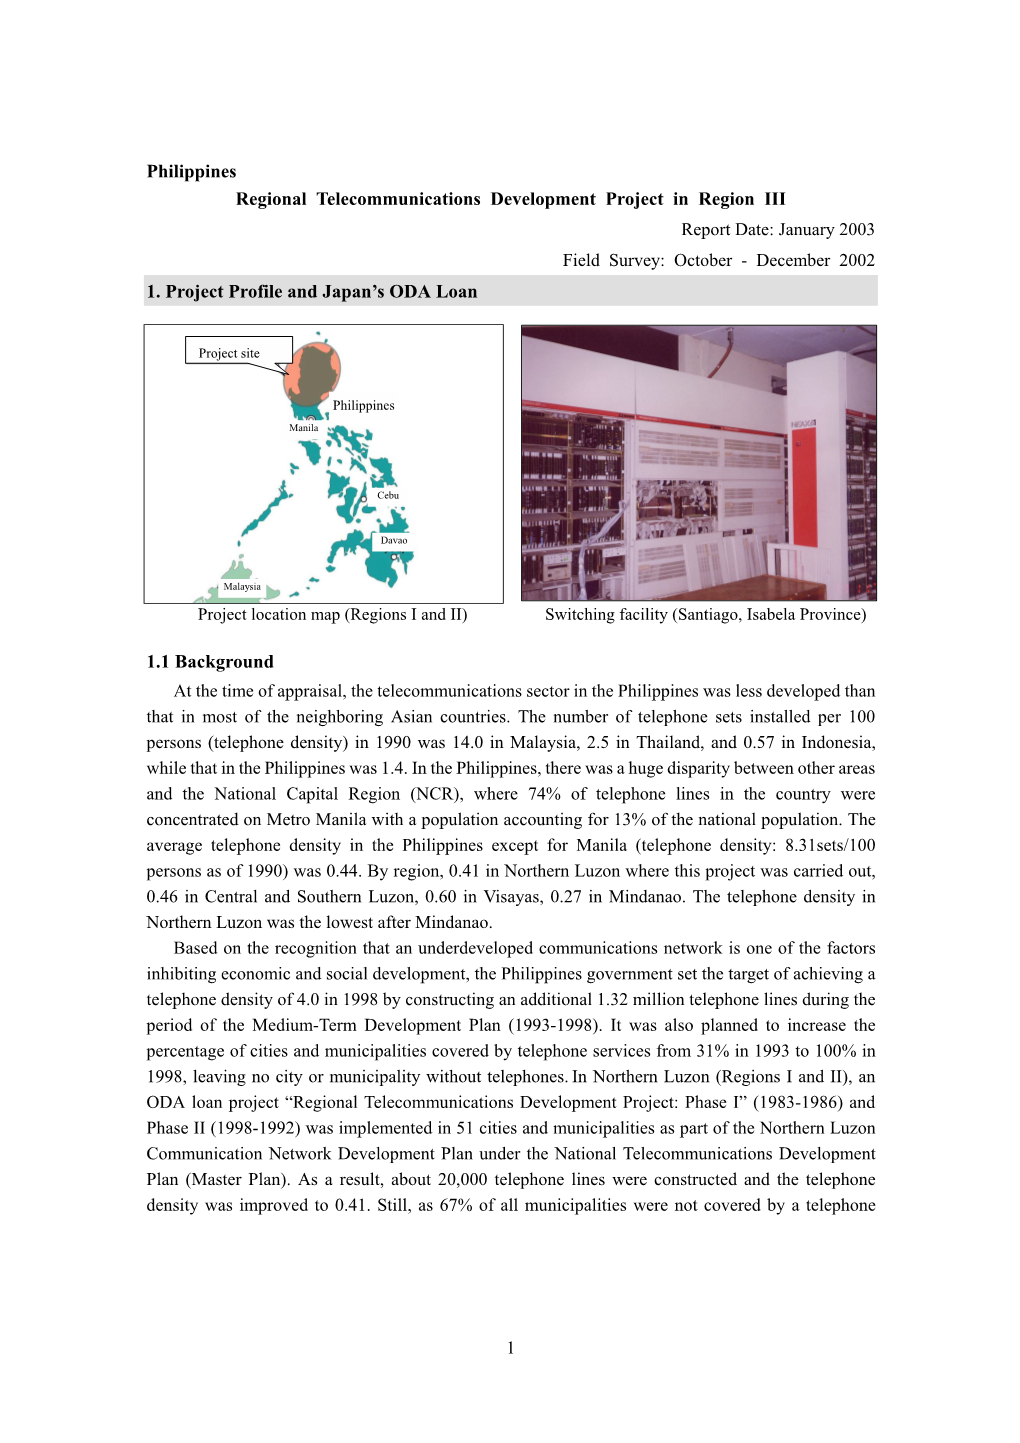 Philippines Regional Telecommunications Development Project in Region III Report Date: January 2003 Field Survey: October - December 2002 1